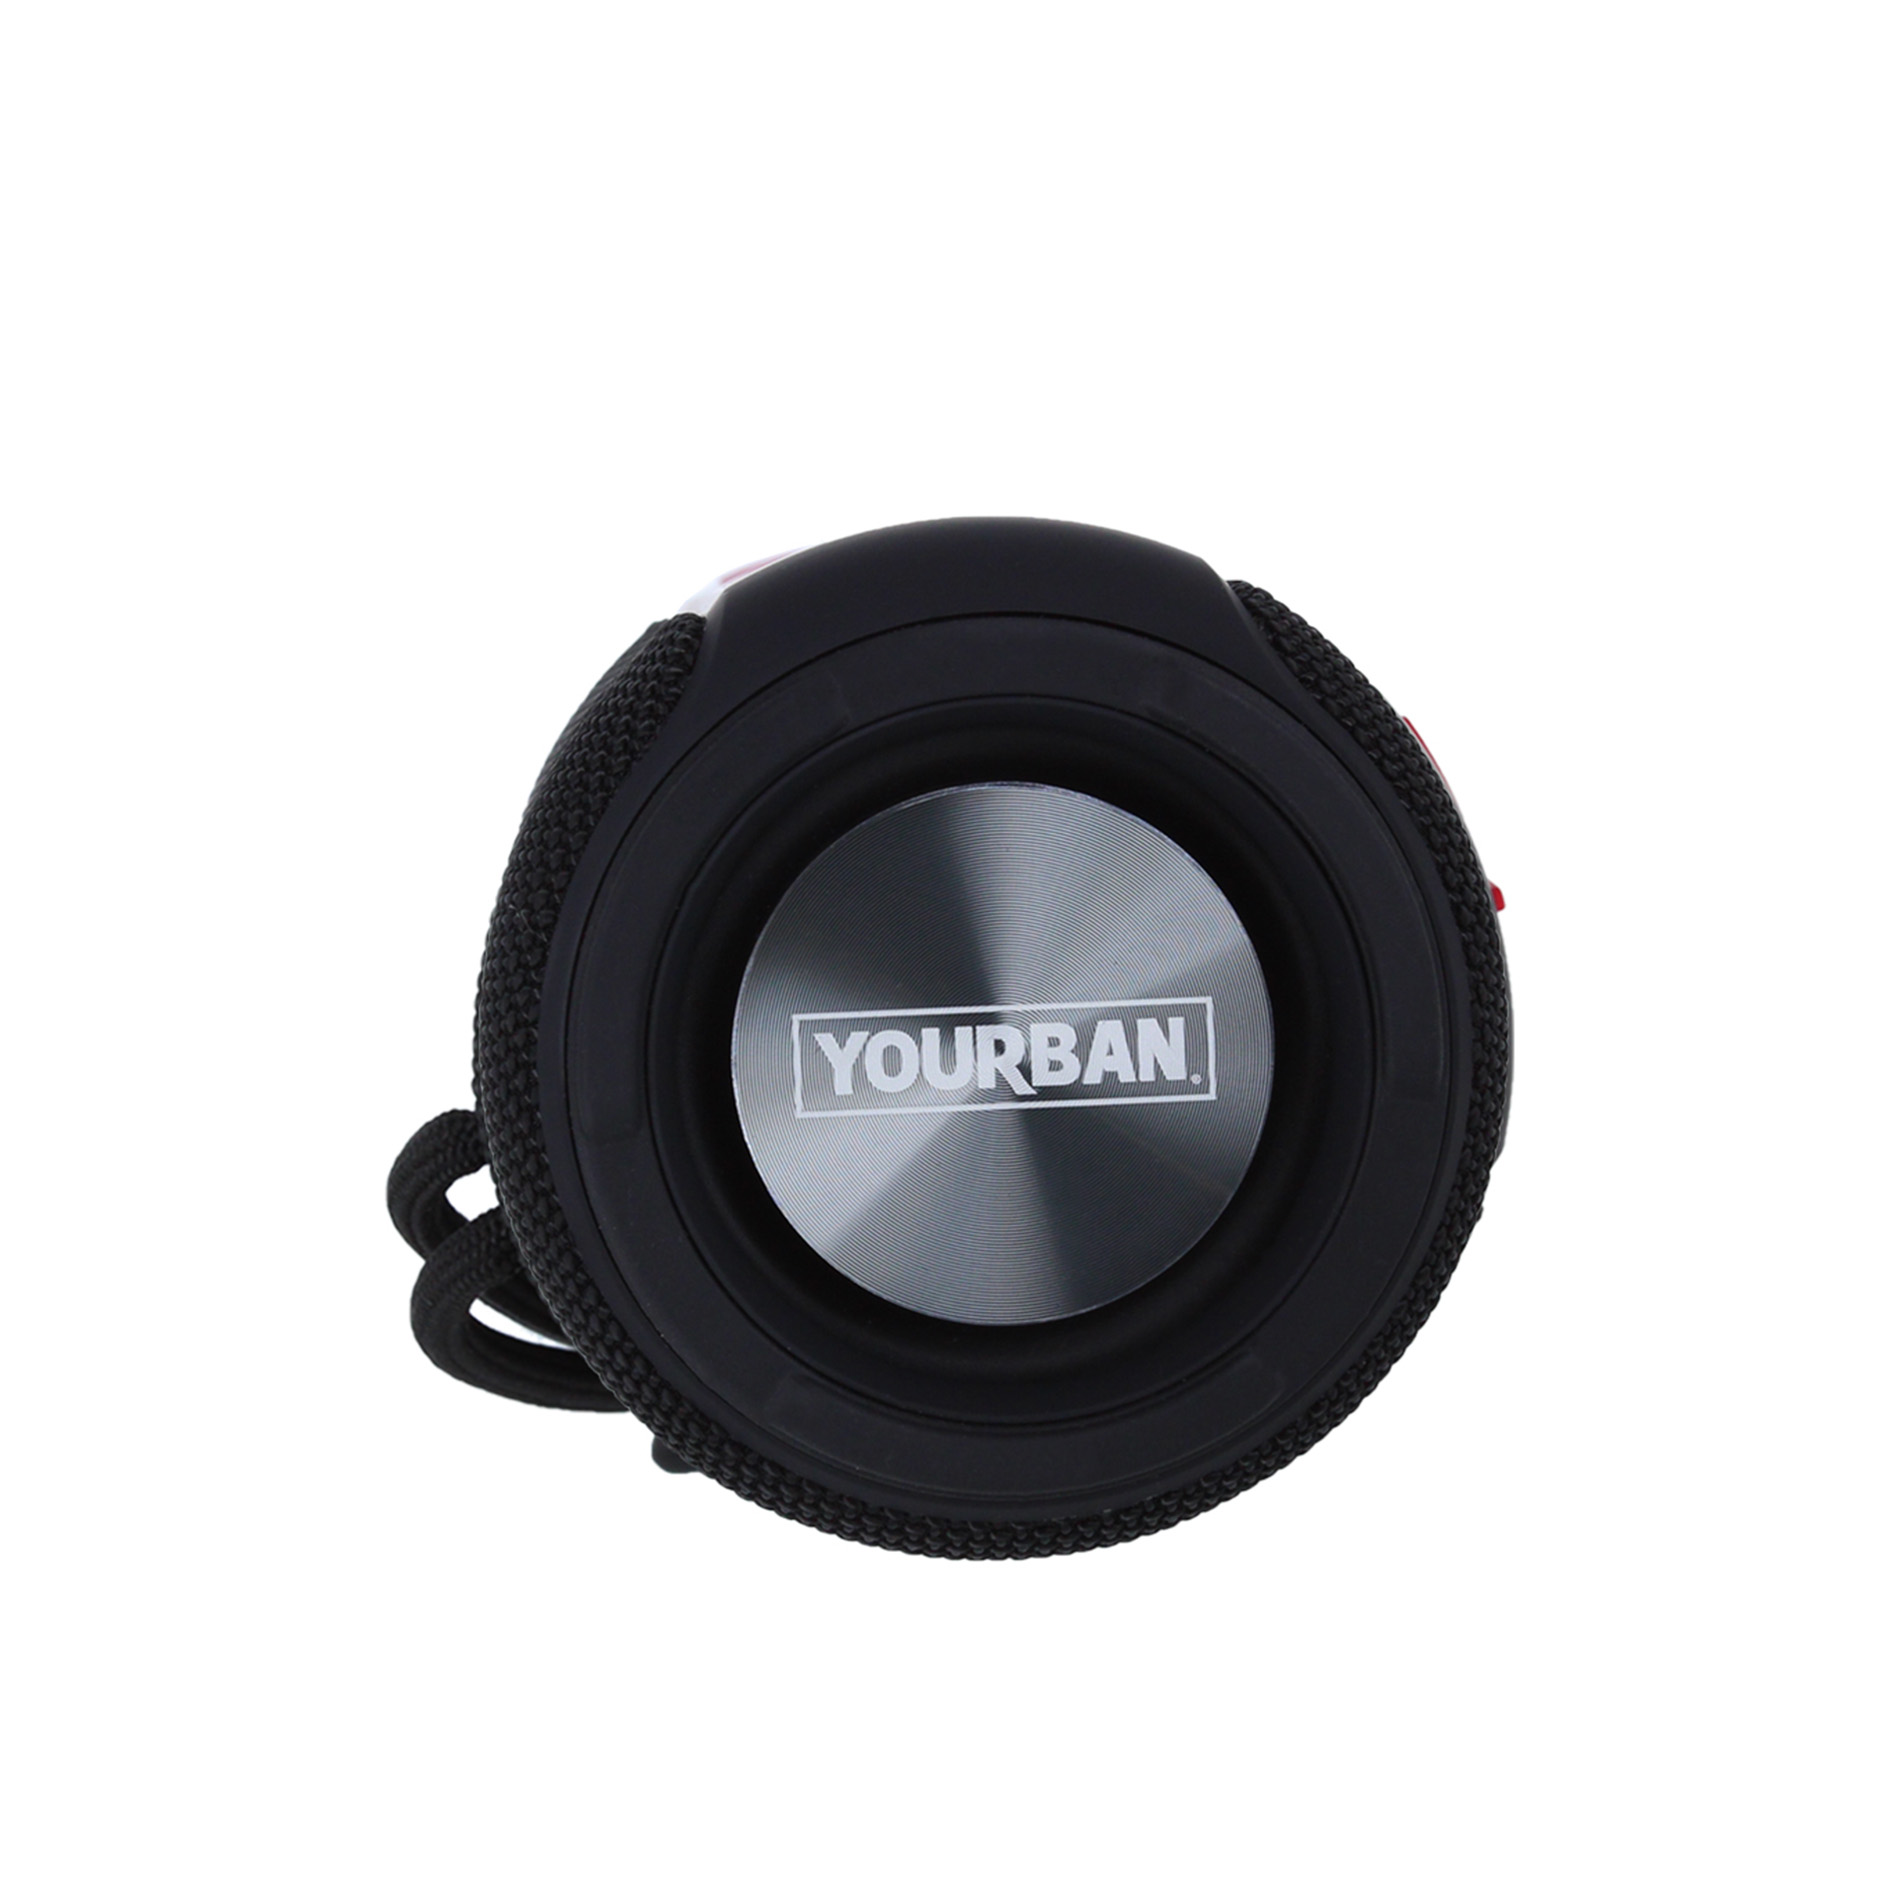 Yourban Getone 30 Black Mk2 - Portable PA system - Variation 6